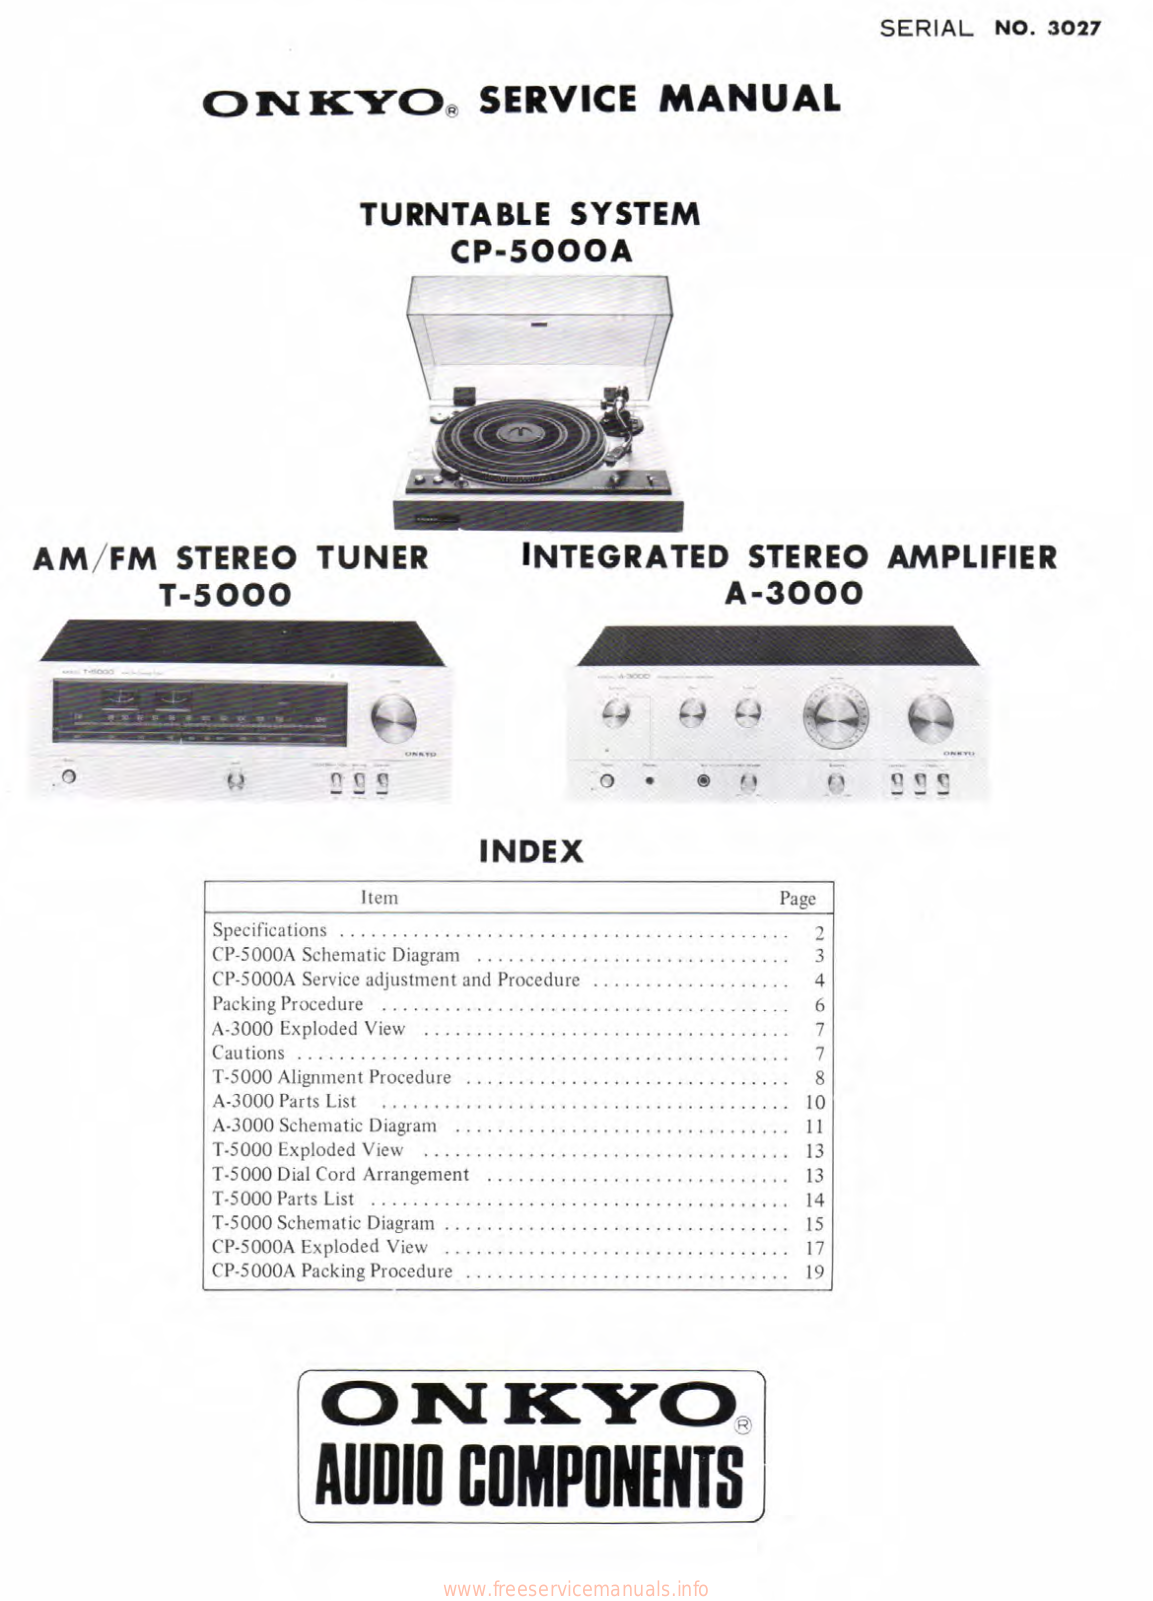 Onkyo CP-5000-A Service Manual